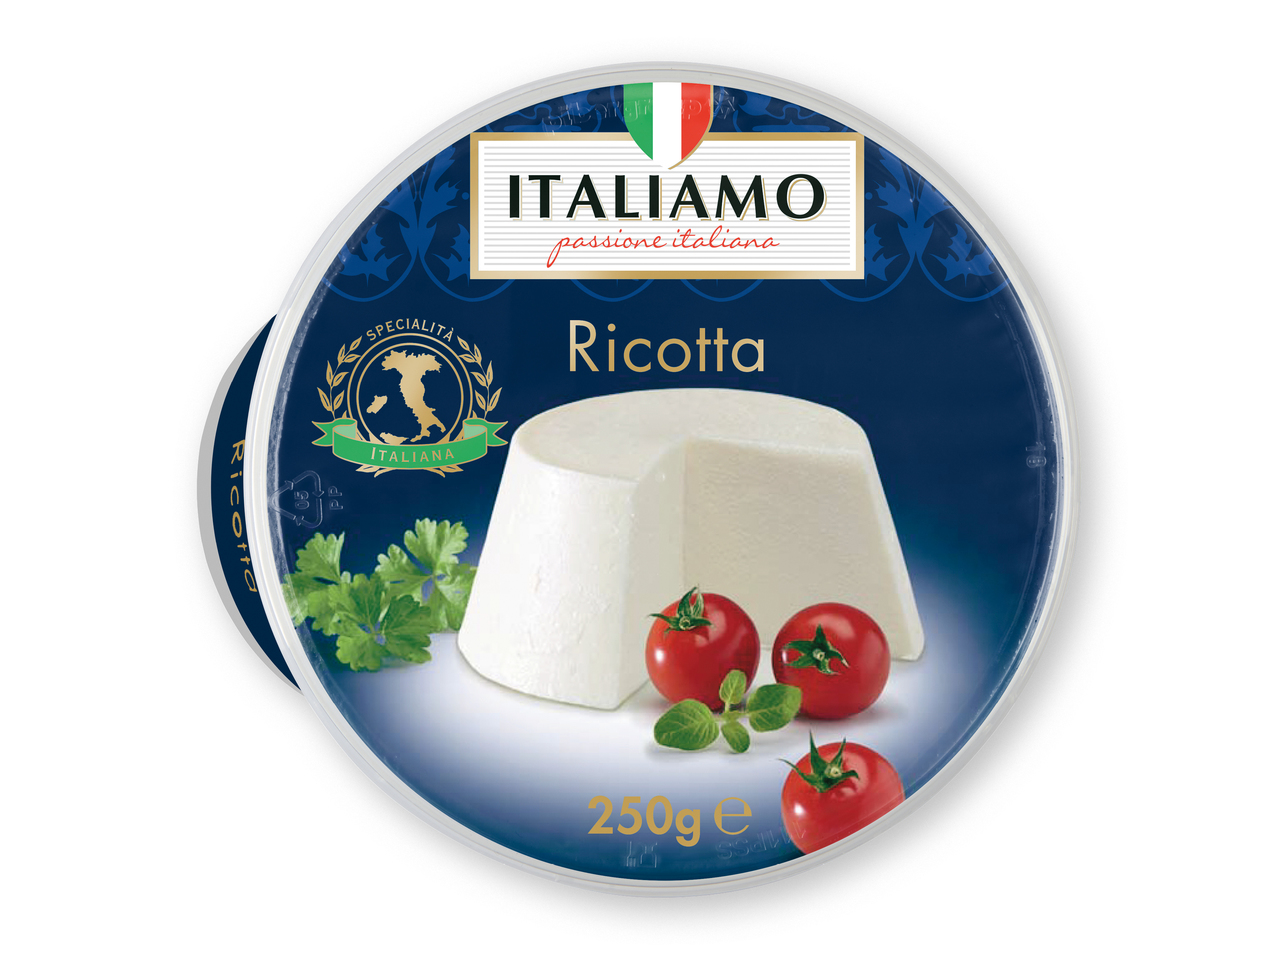 "ITALIAMO" Ricotta